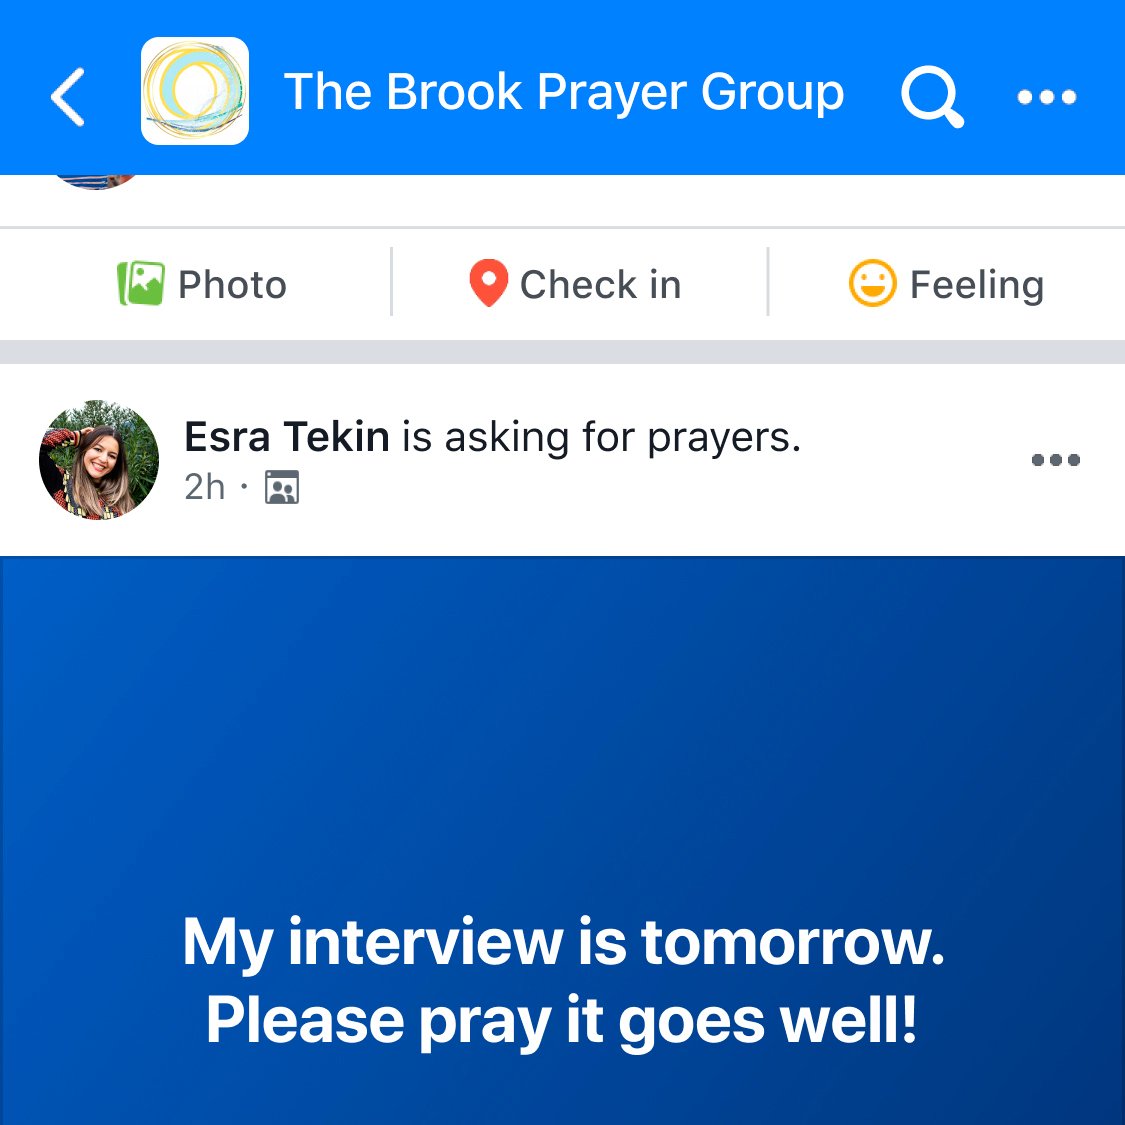 FB's new prayer tool